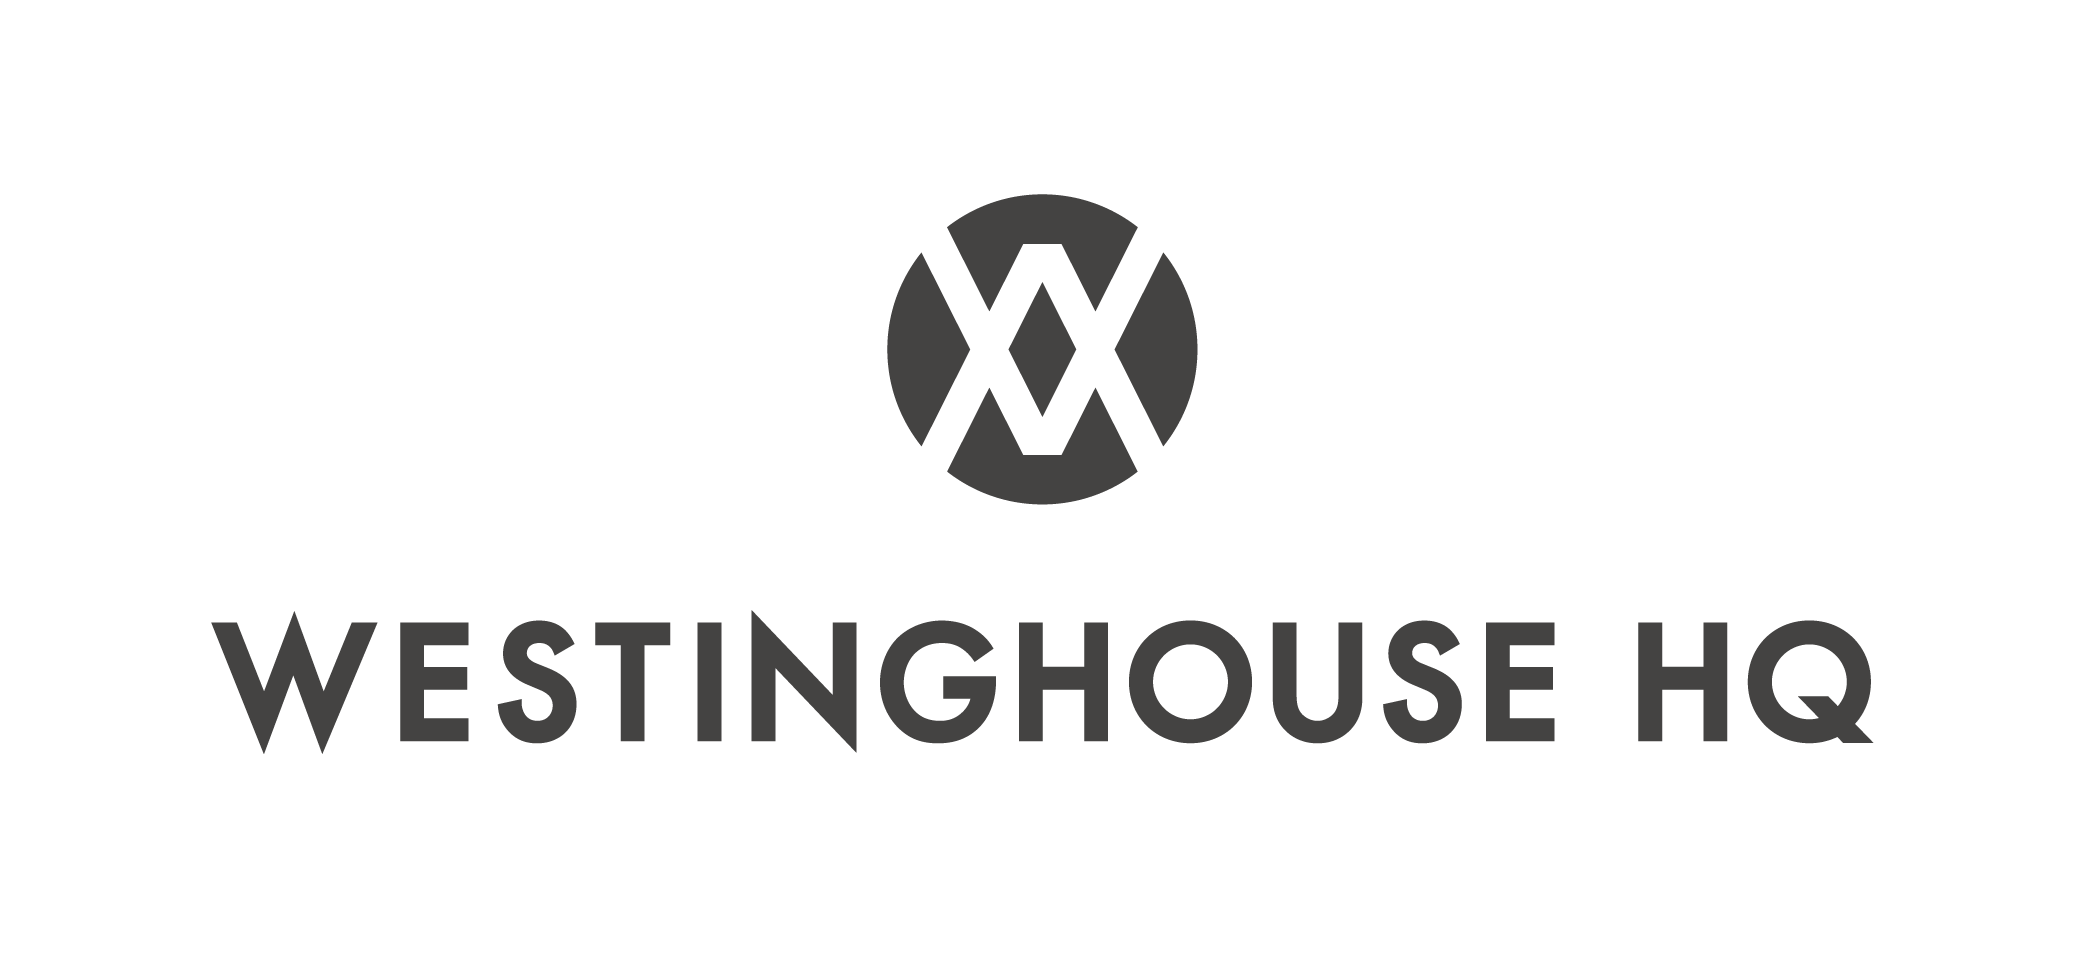 Westinghouse HQ